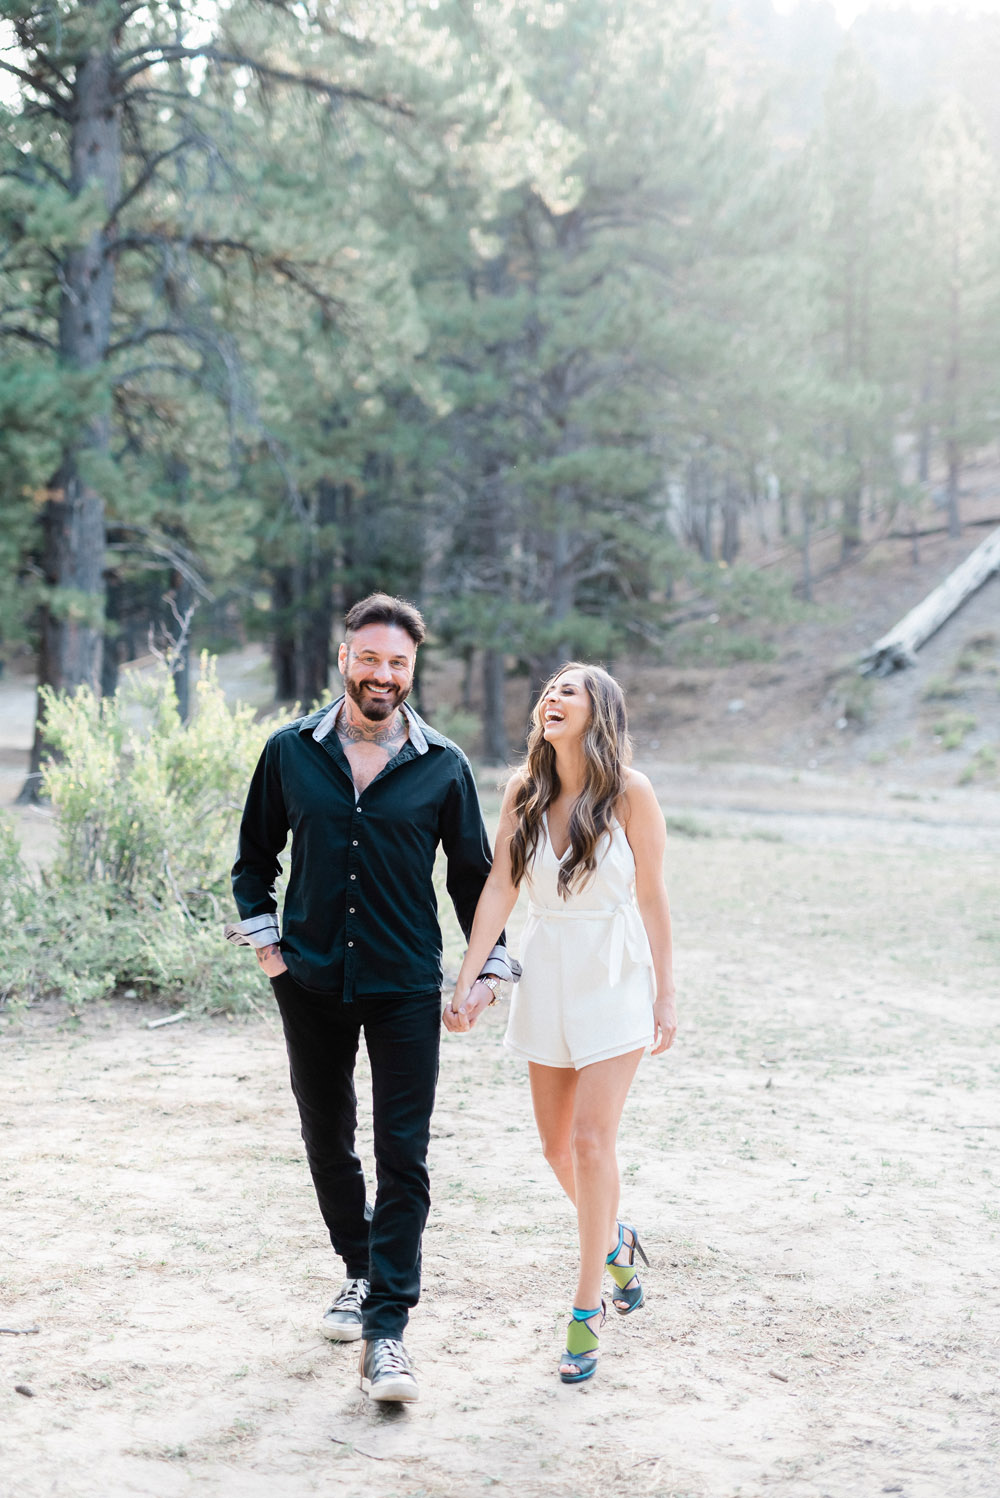 Las Vegas engagement session in the mountains | Kristen Marie Weddings + Portraits, Las Vegas wedding photographer